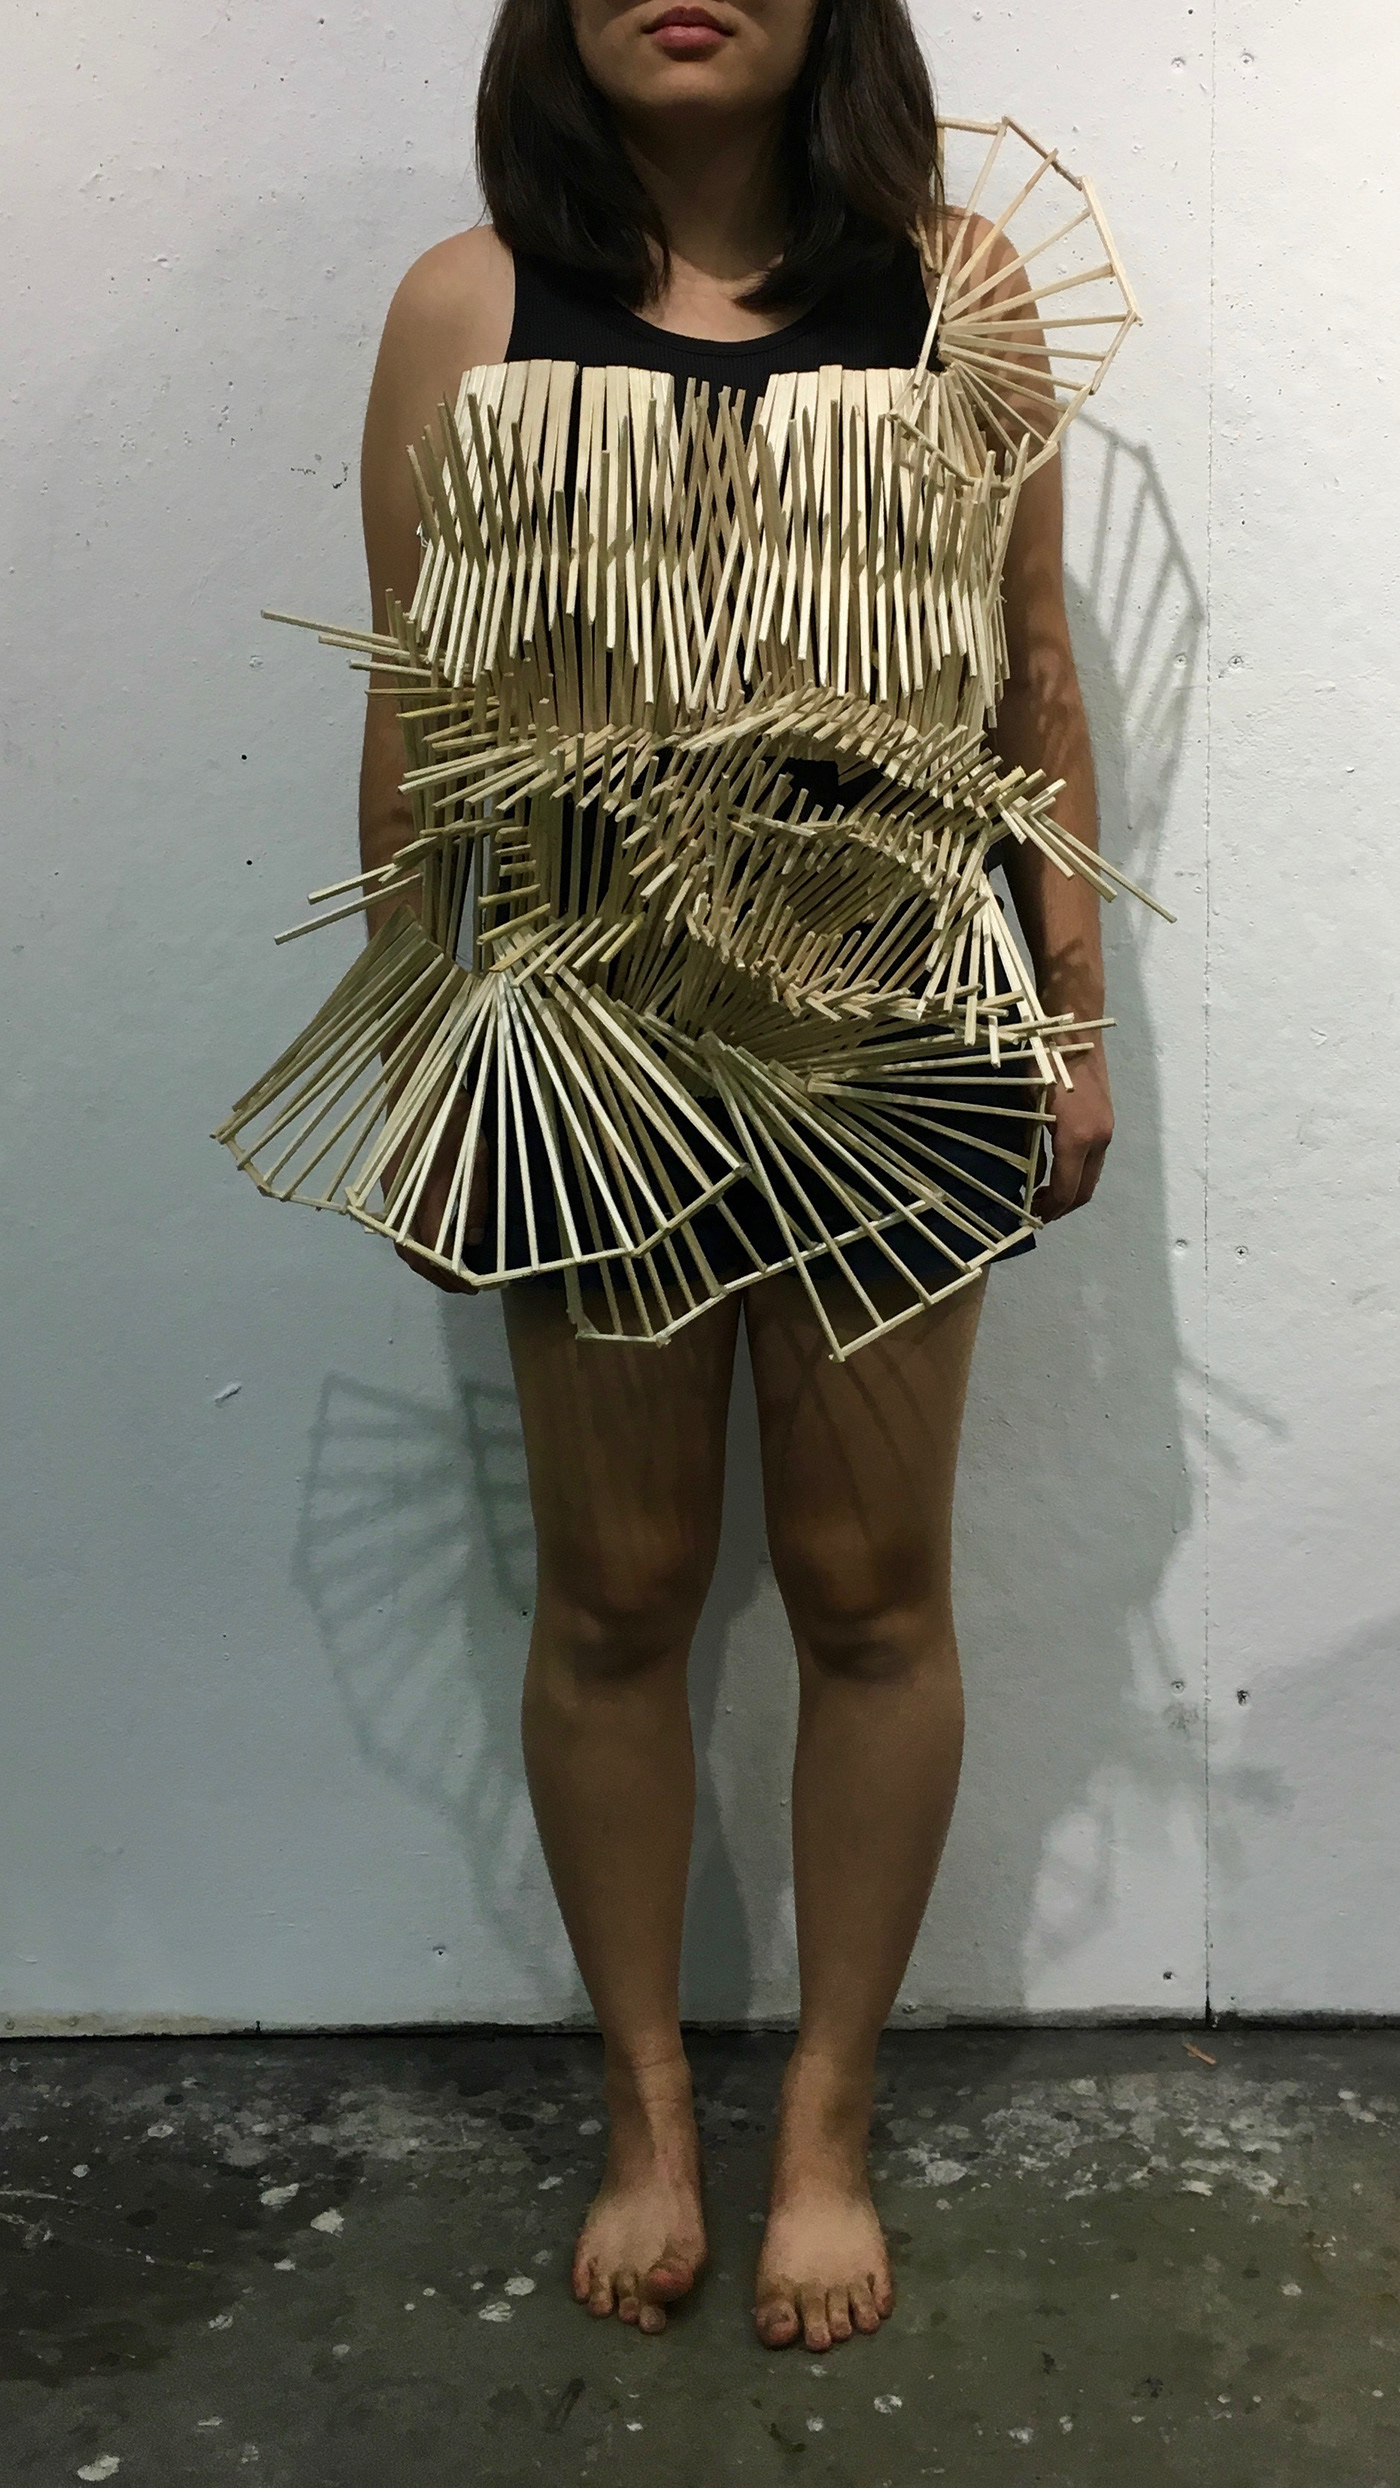 apparel textile fine art sculpture